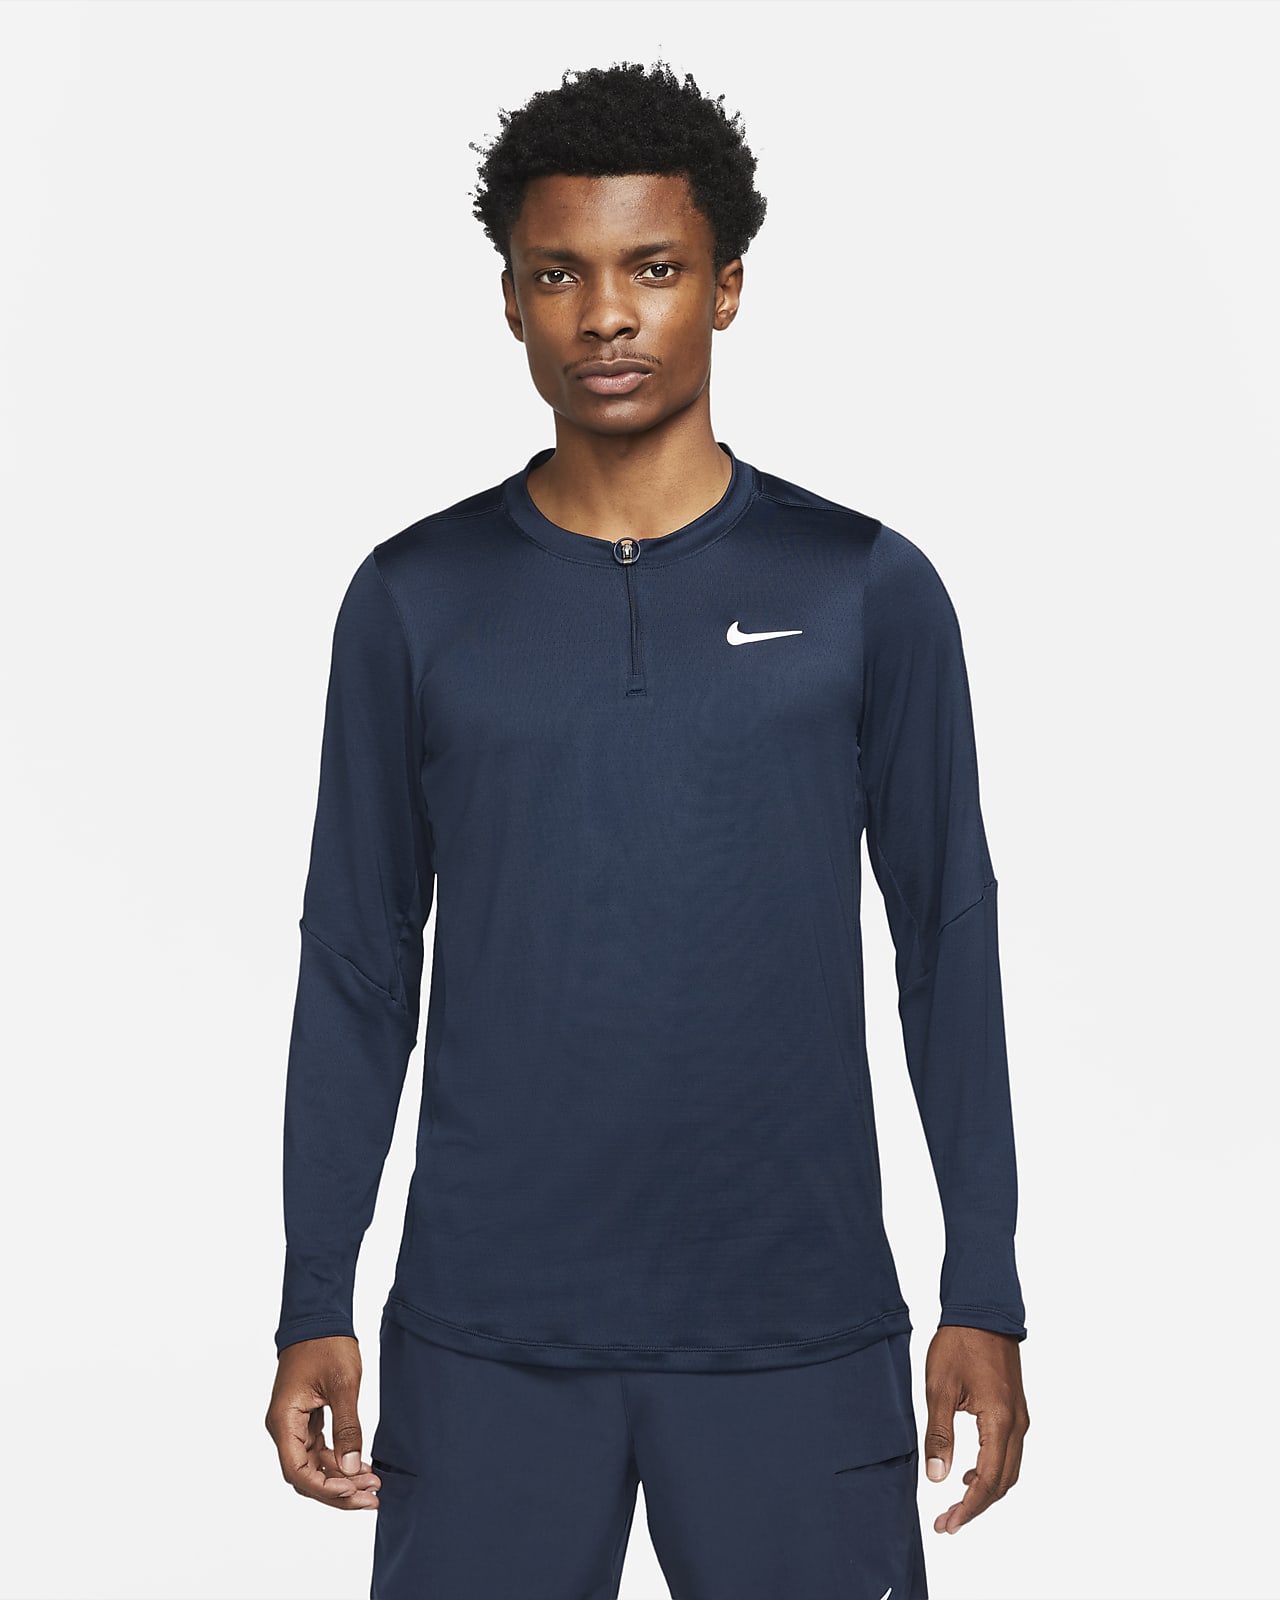 NikeCourt Dri-FIT Advantage Men's Half-Zip Tennis Top. Nike AT